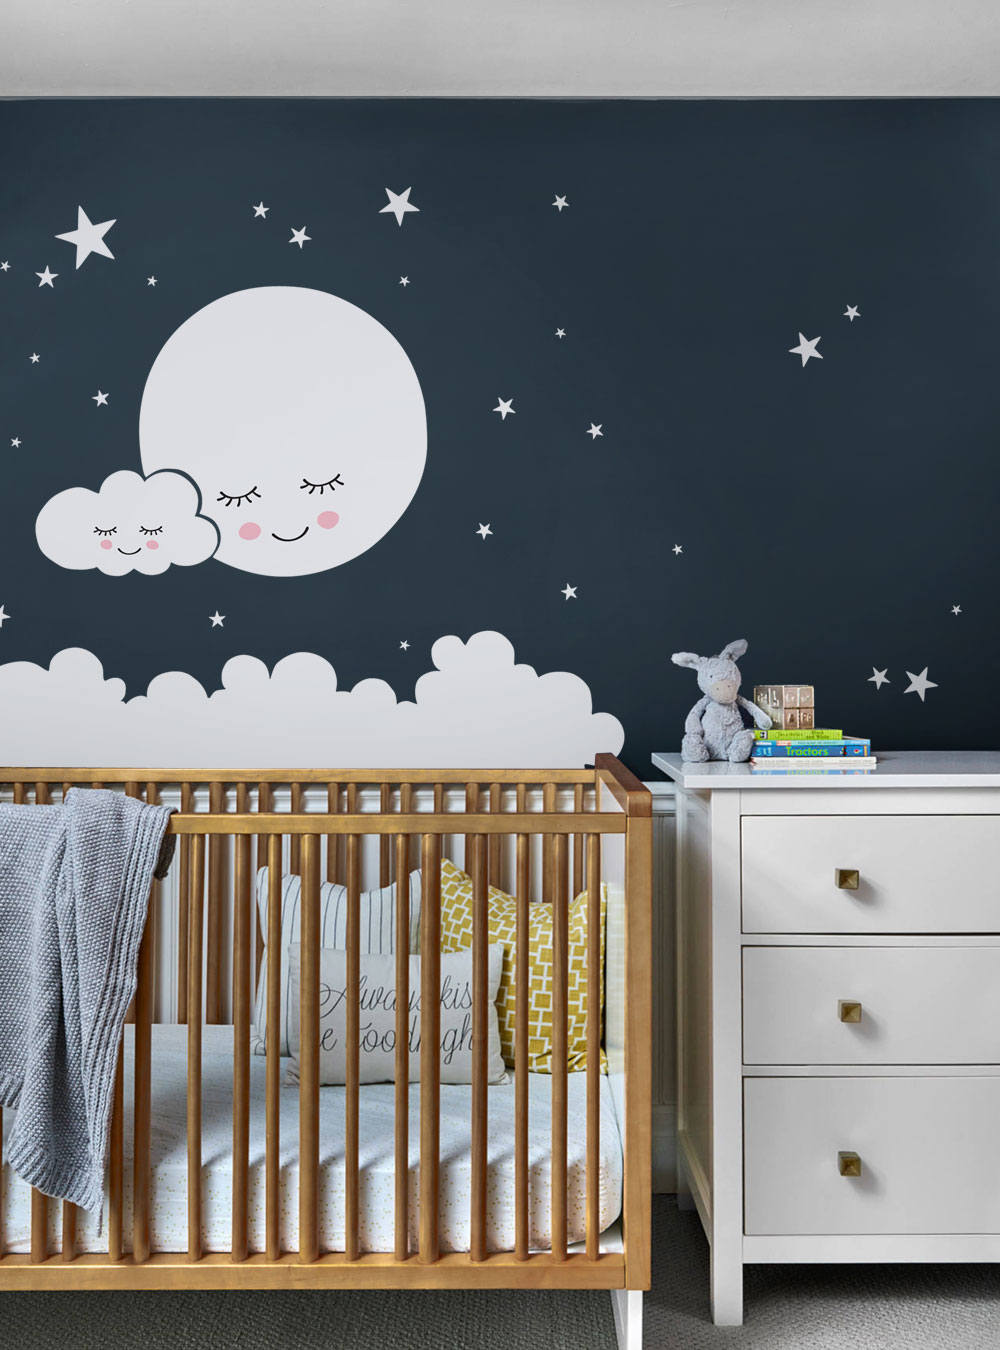 Modern Moon Stars Design for Home Bedroom Kids Room Nursery Daycare Playroom School Decoration Sticker Lunar Phases 10 x 30 White Vinyl Wall Art Decal 